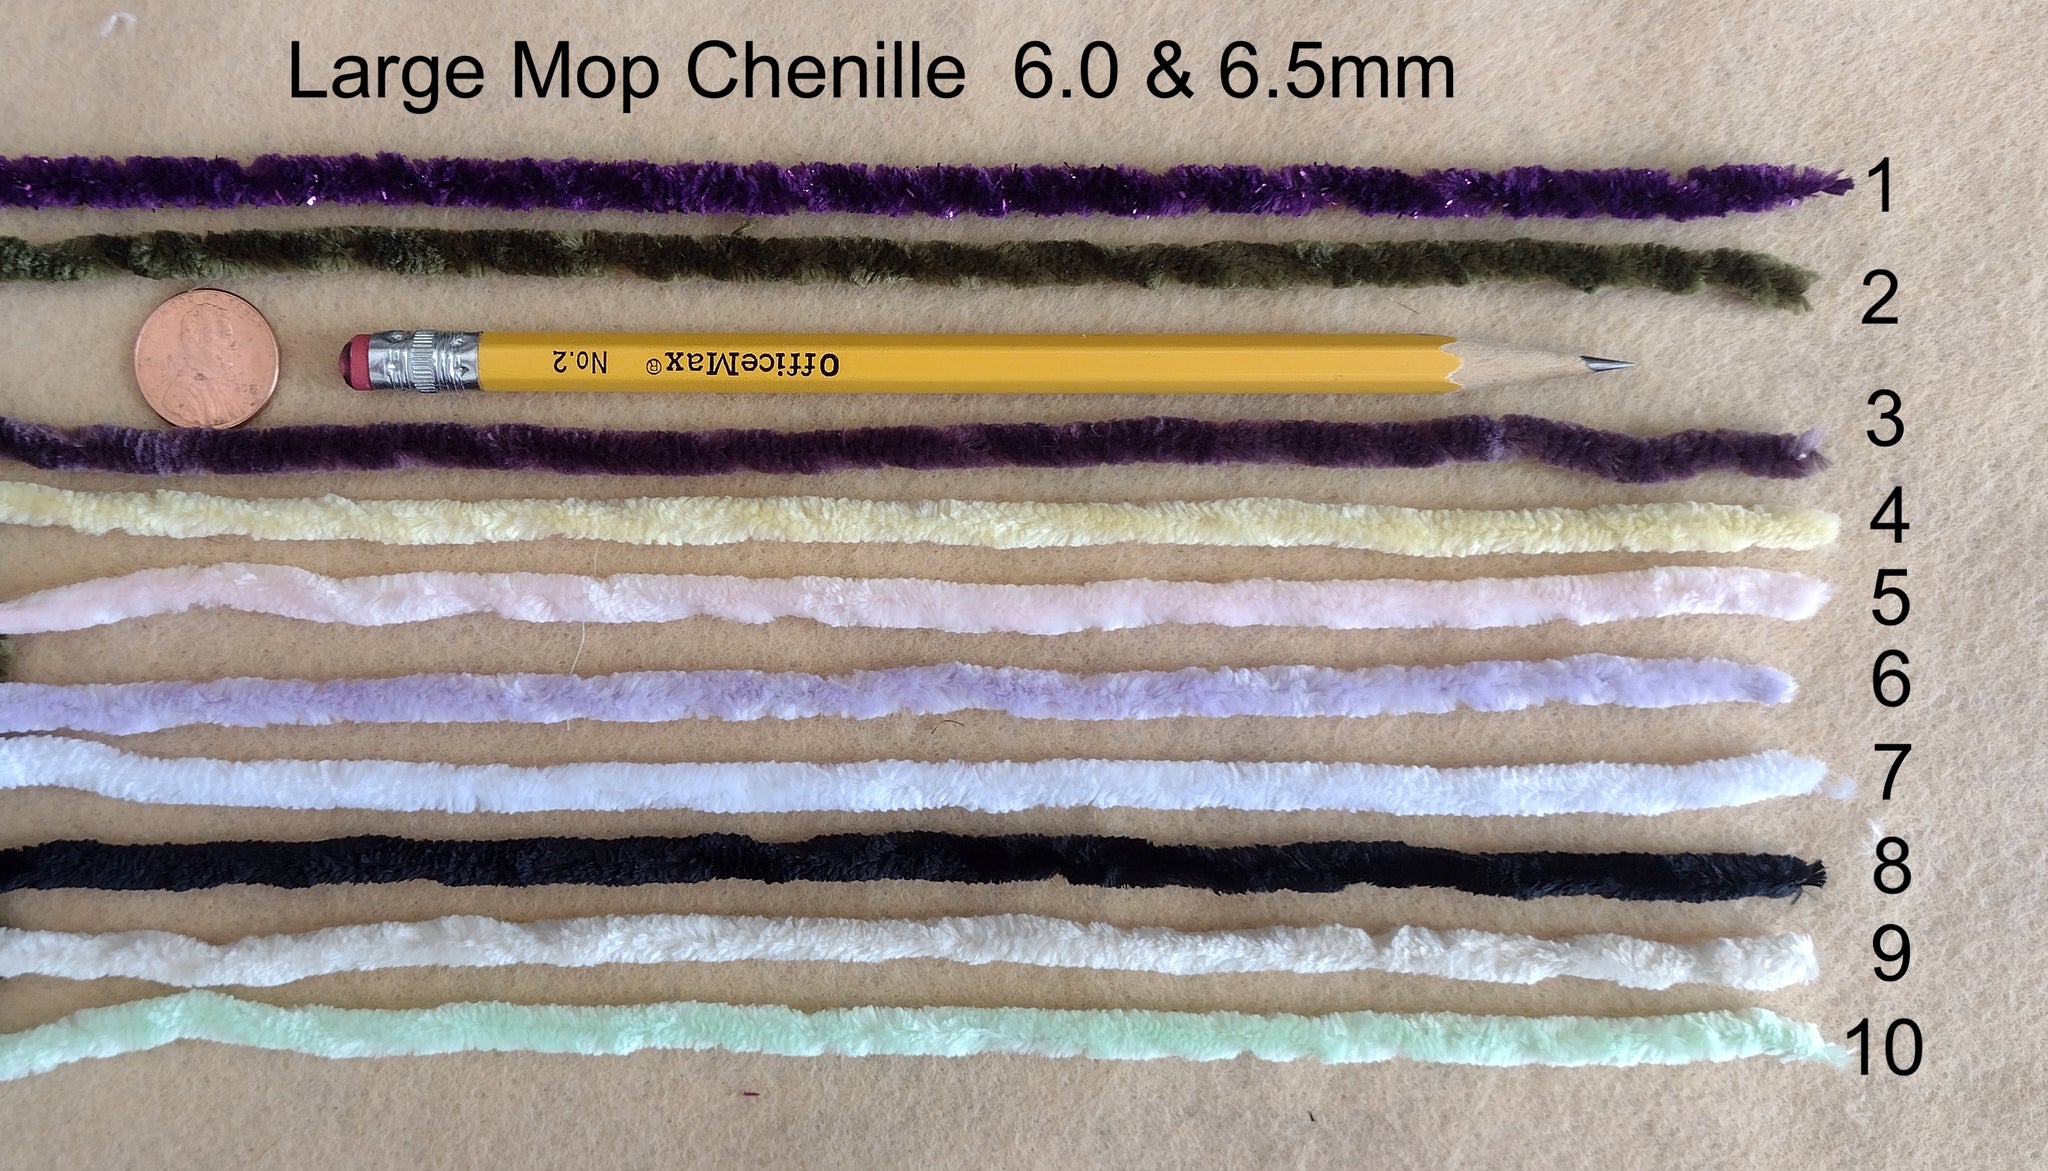 Large Mop Chenille Colors 6.0 & 6.5mm